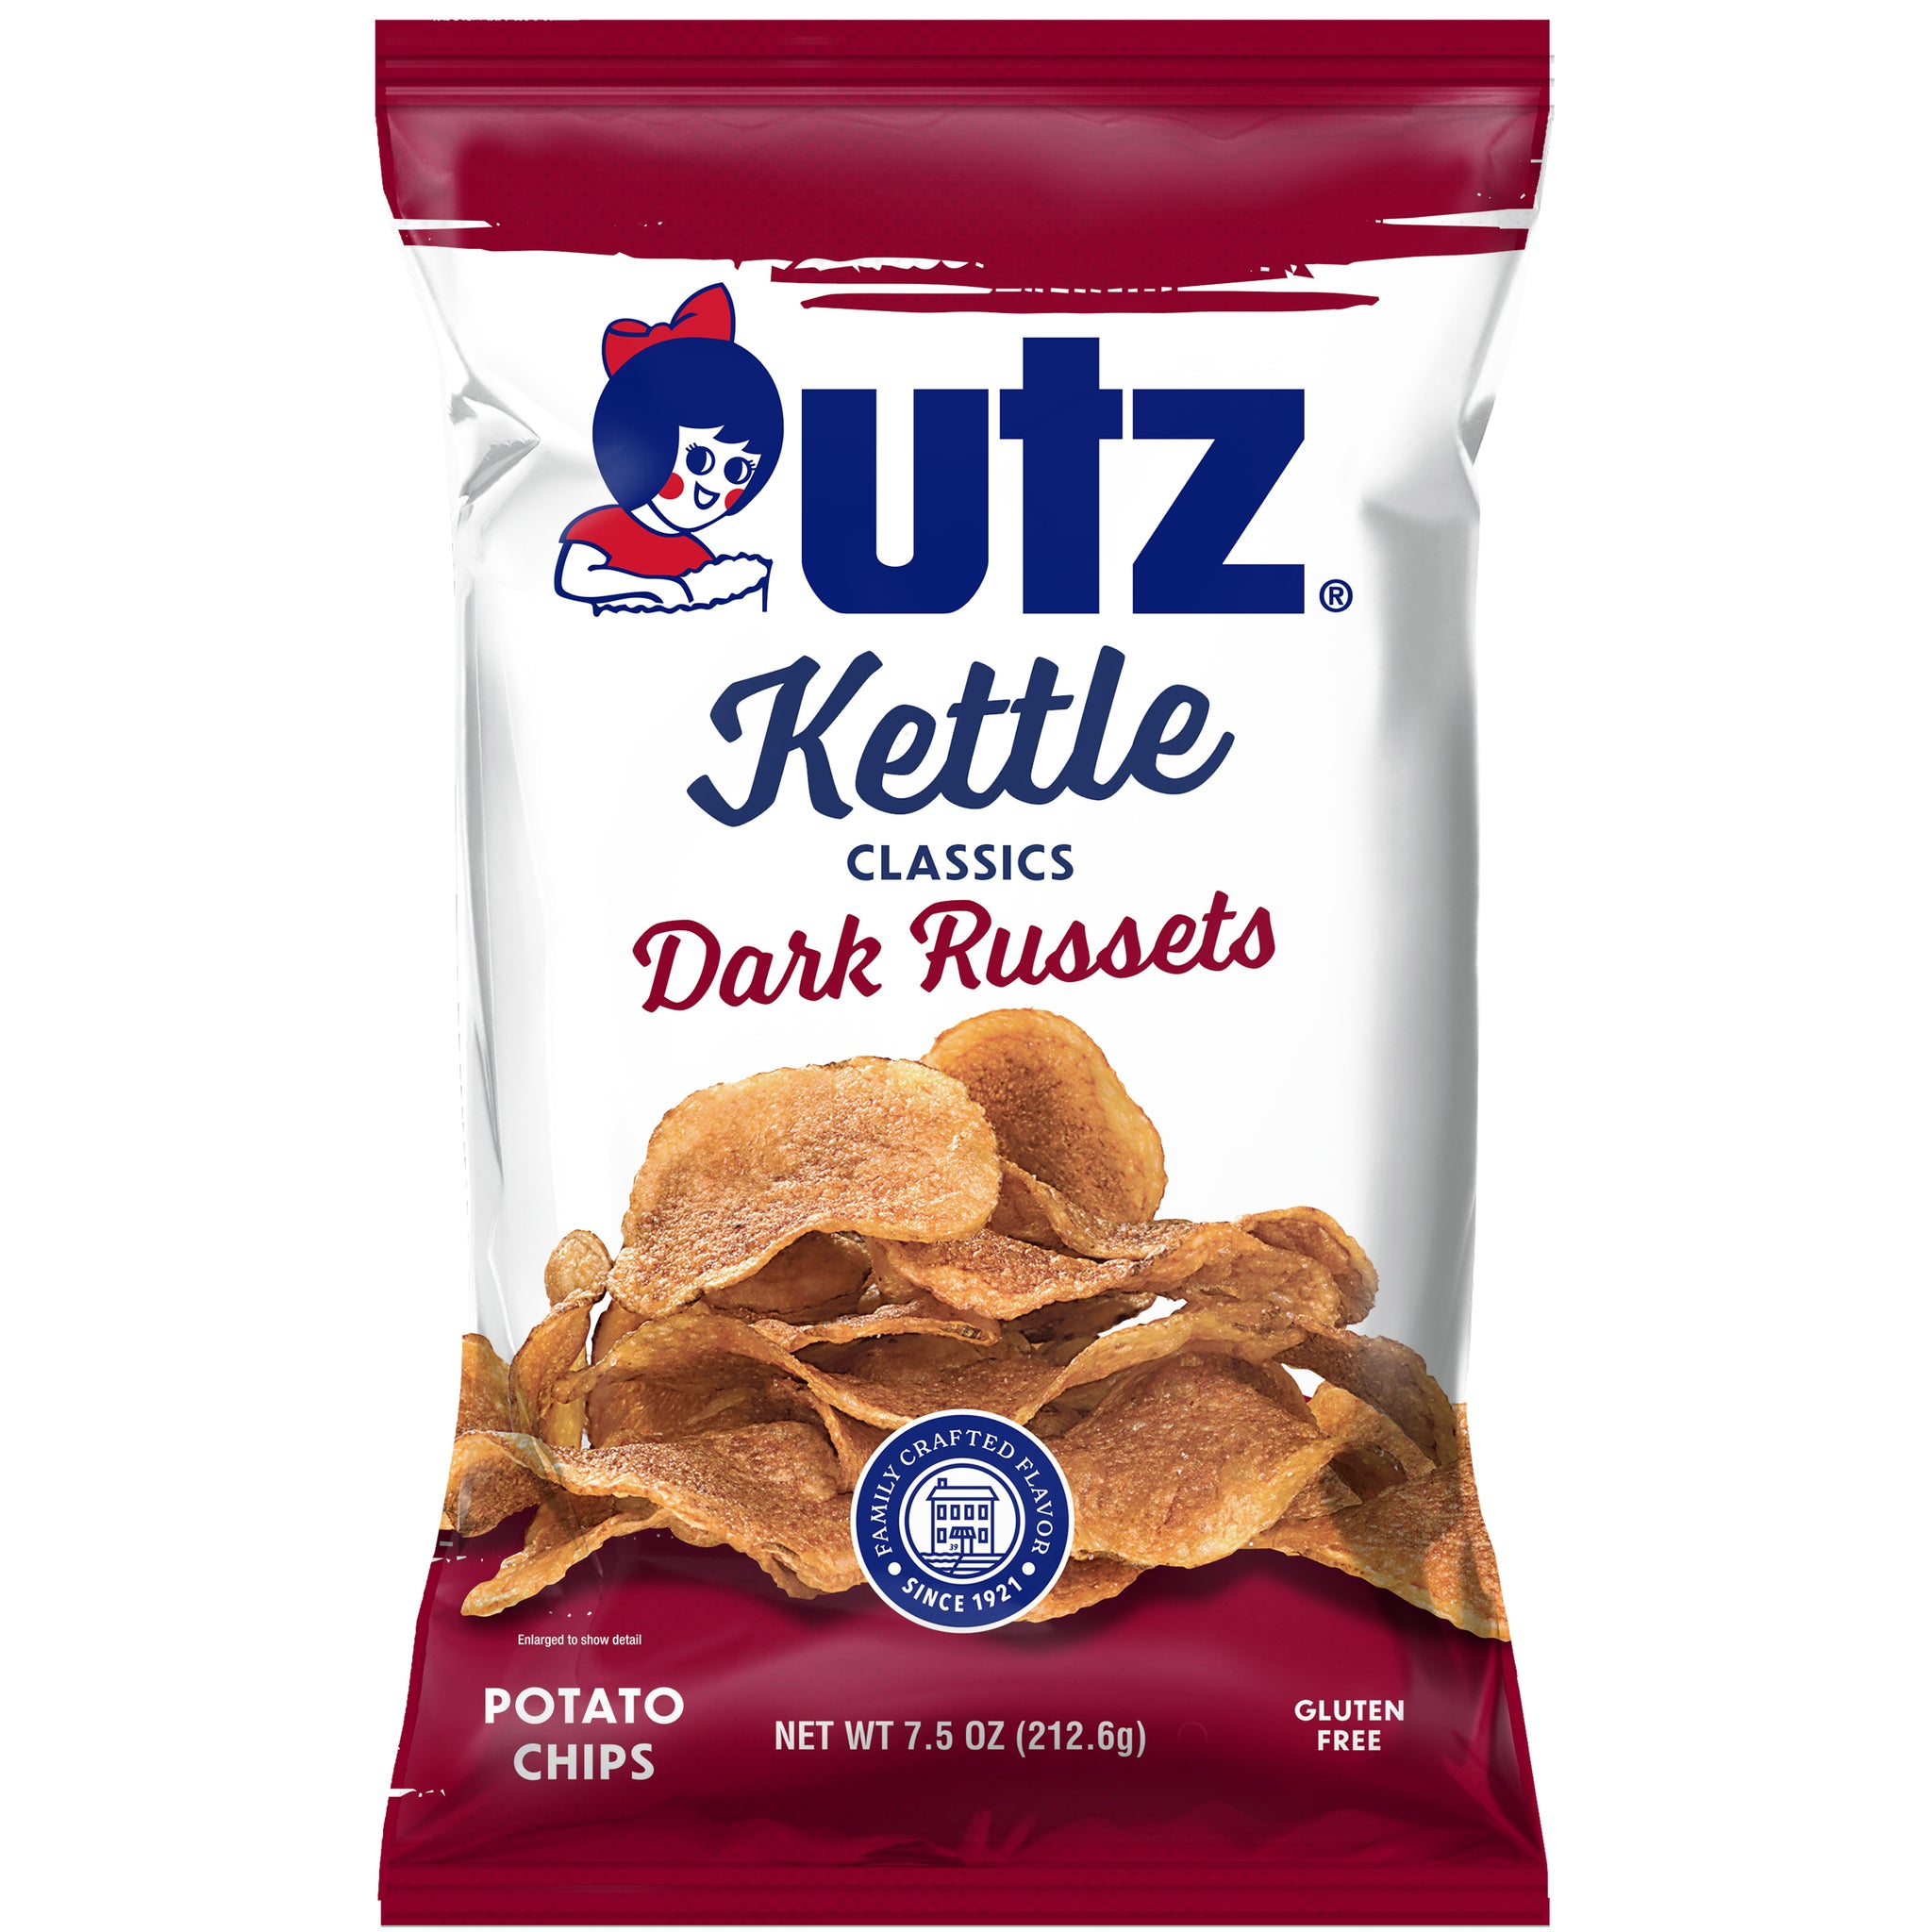 Utz Kettle Classics Potato Chips Dark Russets 7.5 oz.